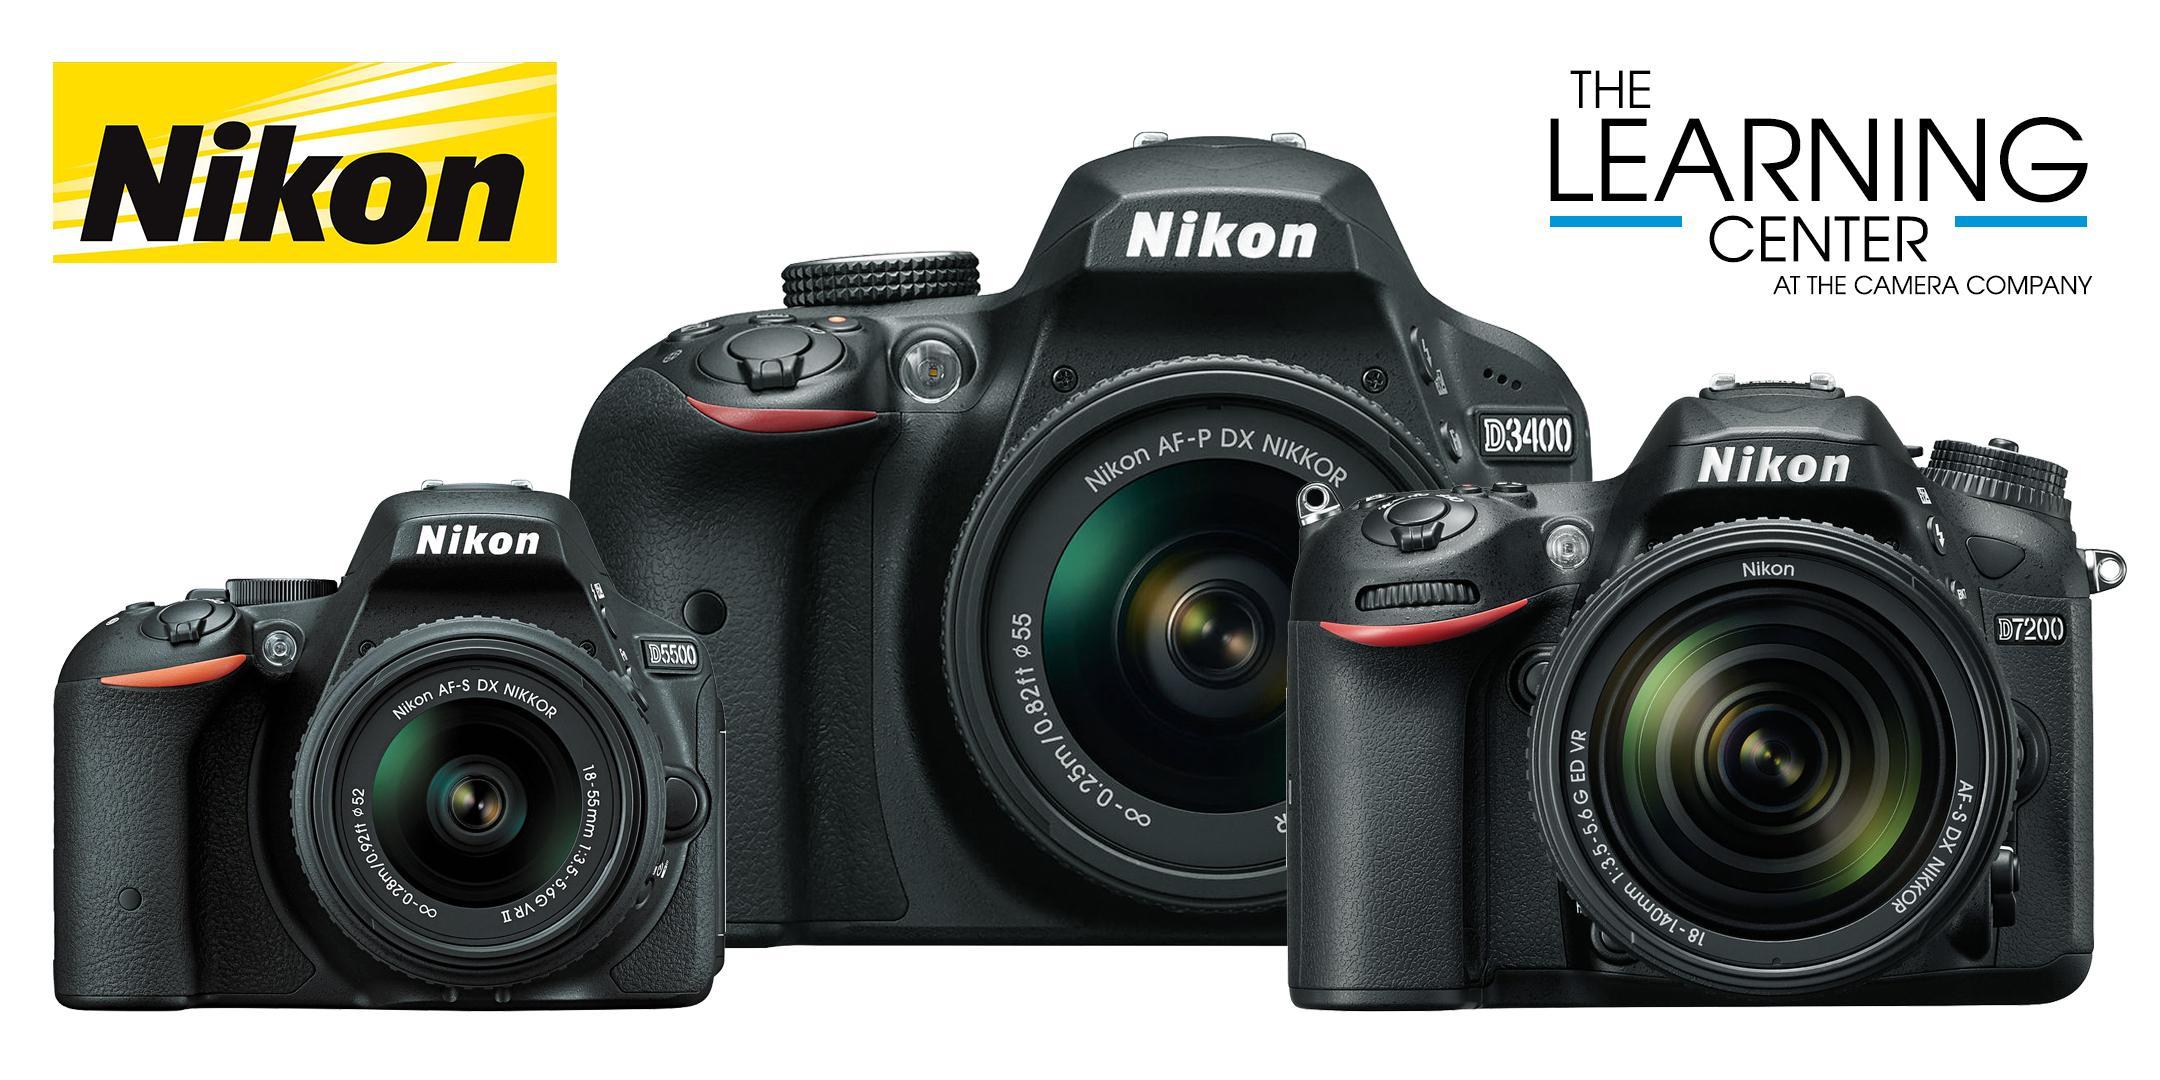 Nikon Basics - West, Feb. 1